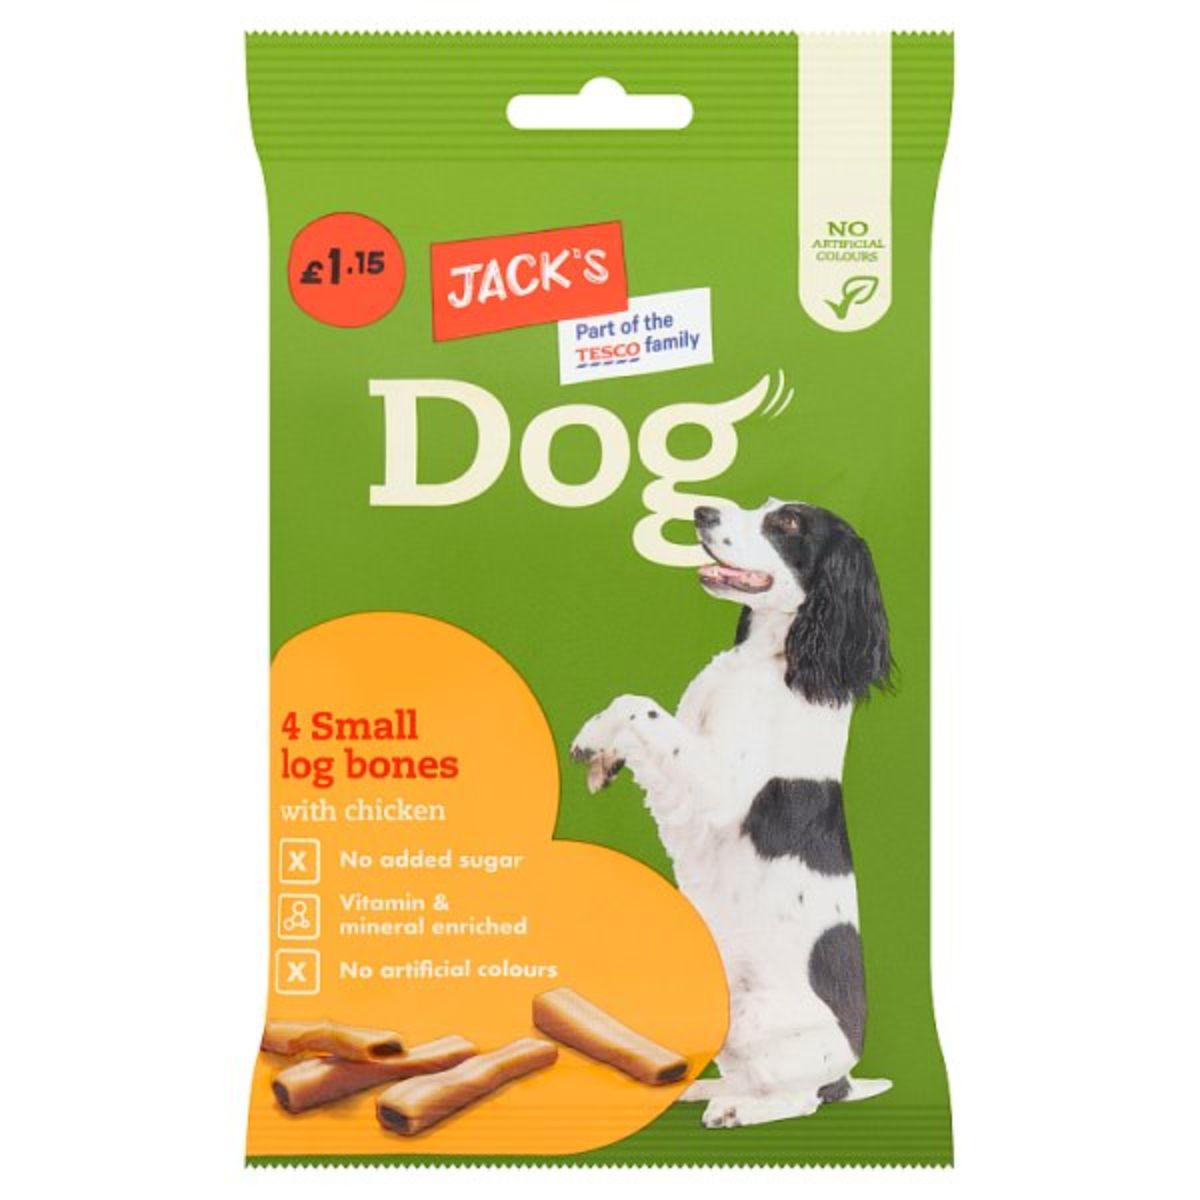 Jacks - Dog 4 Small Log Bones - 180g in a bag.